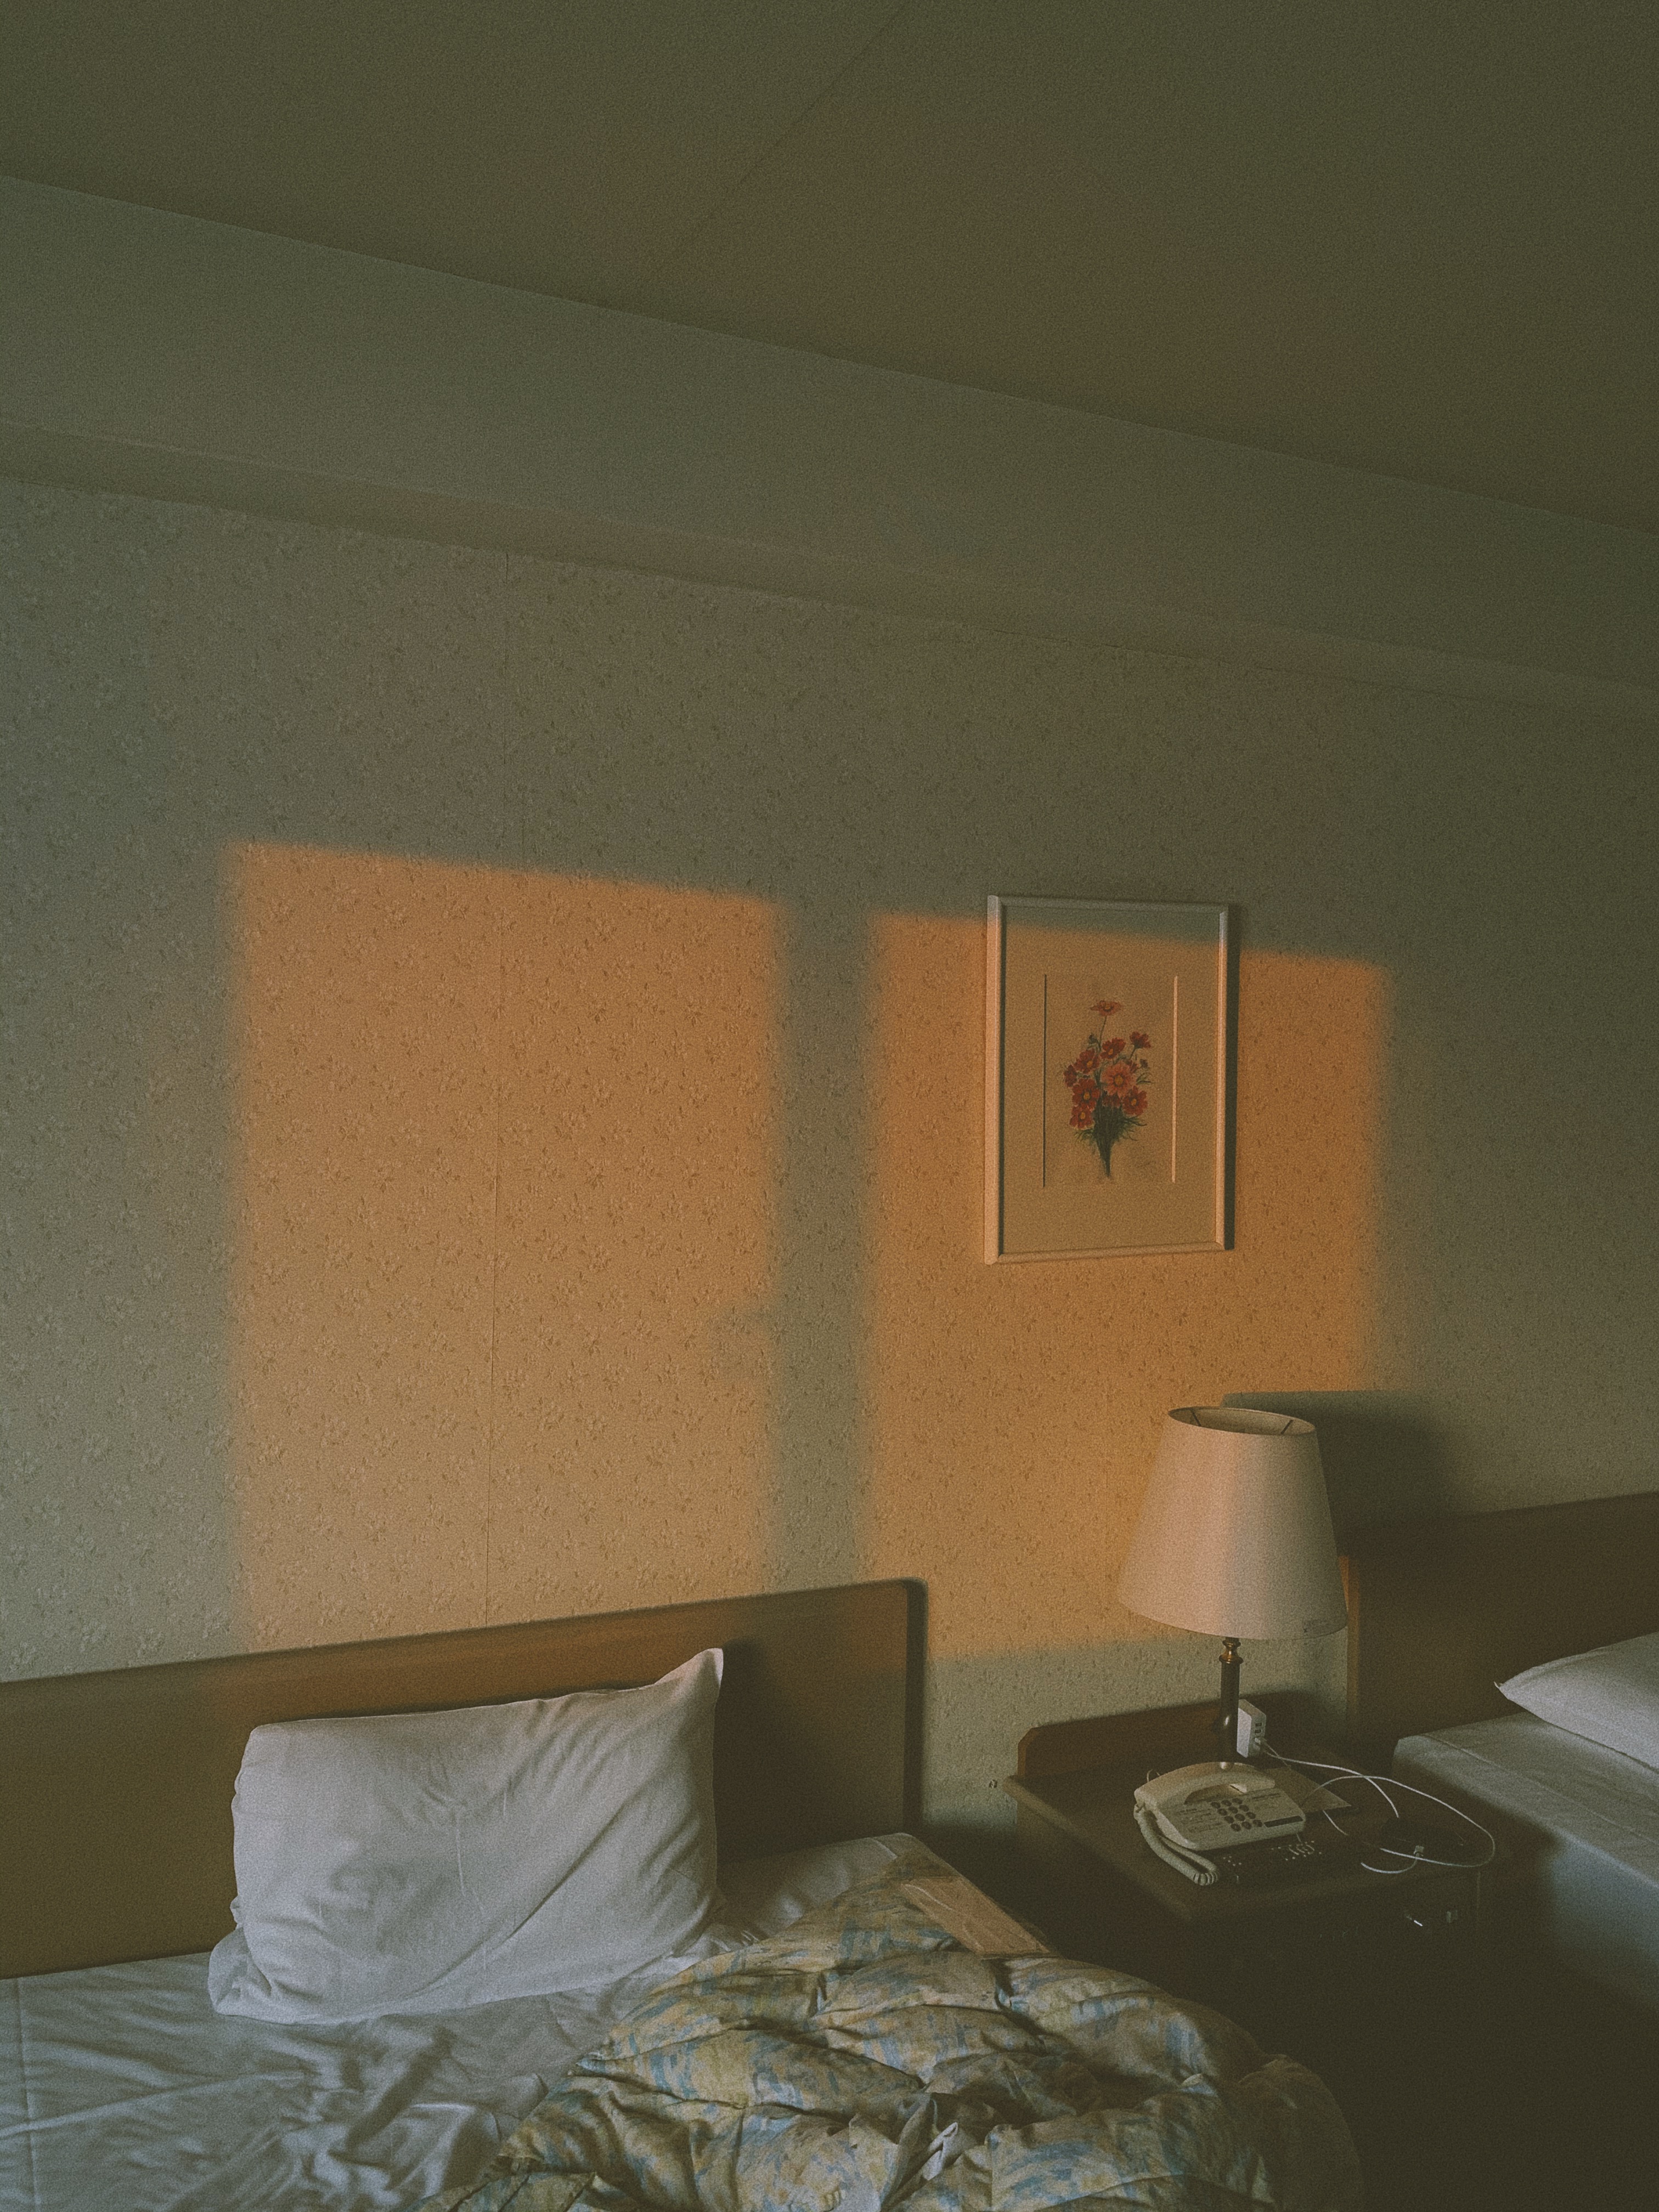 "Waking Up in Hotel Rooms". © Ayaka Takine - IPPAWARDS